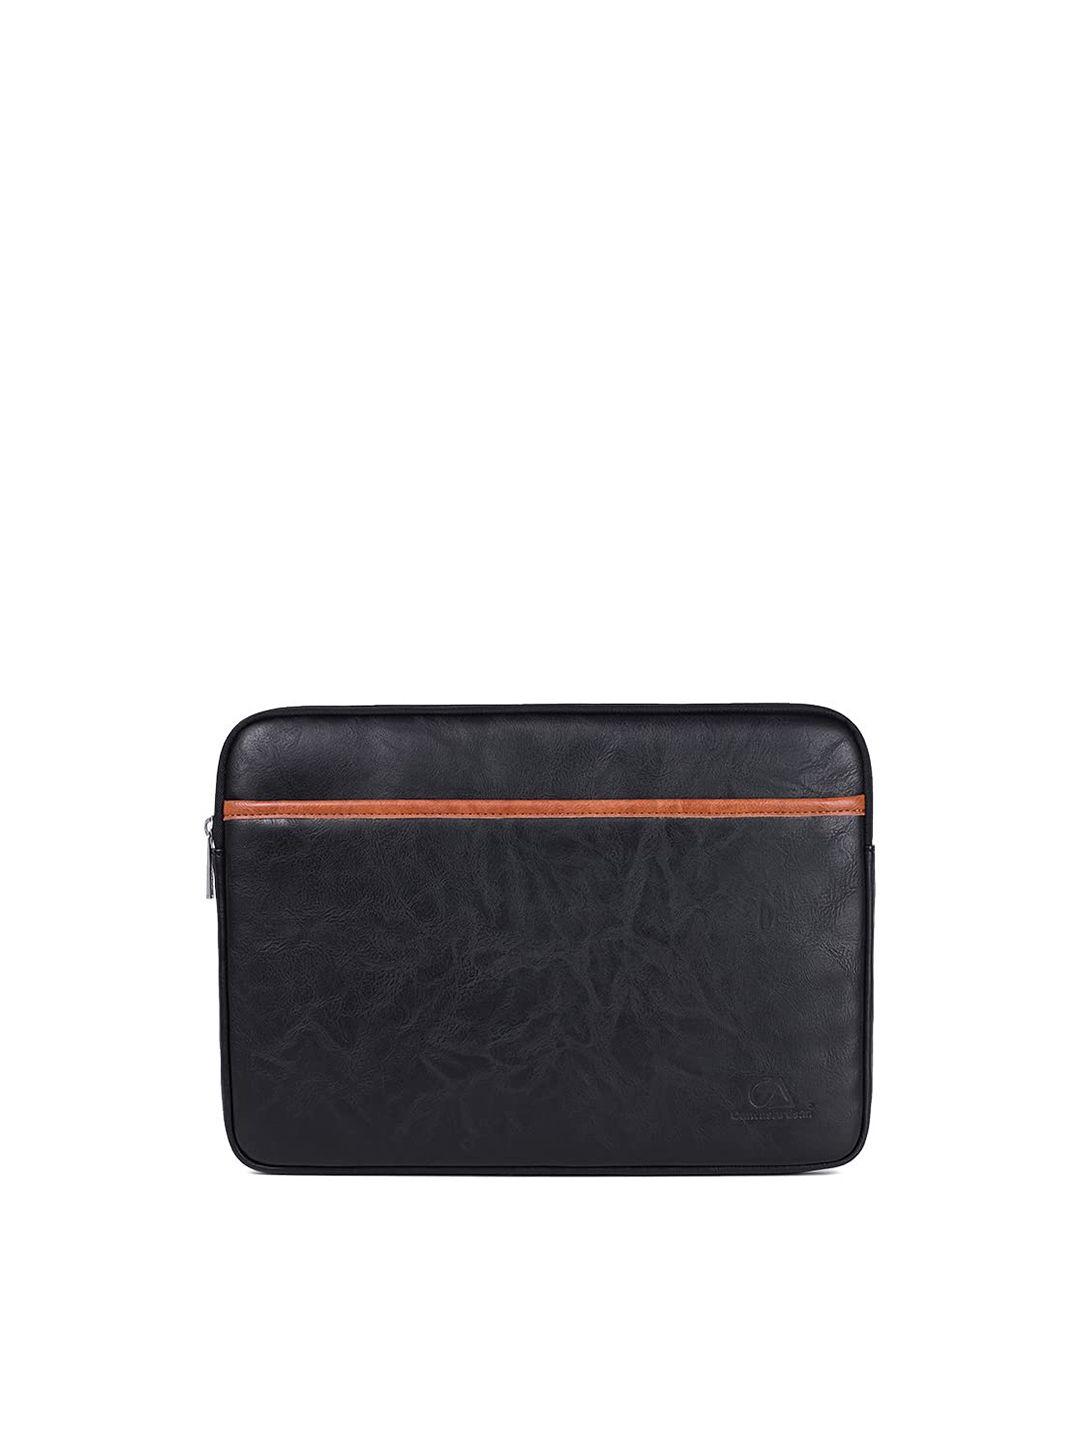 red lemon unisex brown & black laptop bag